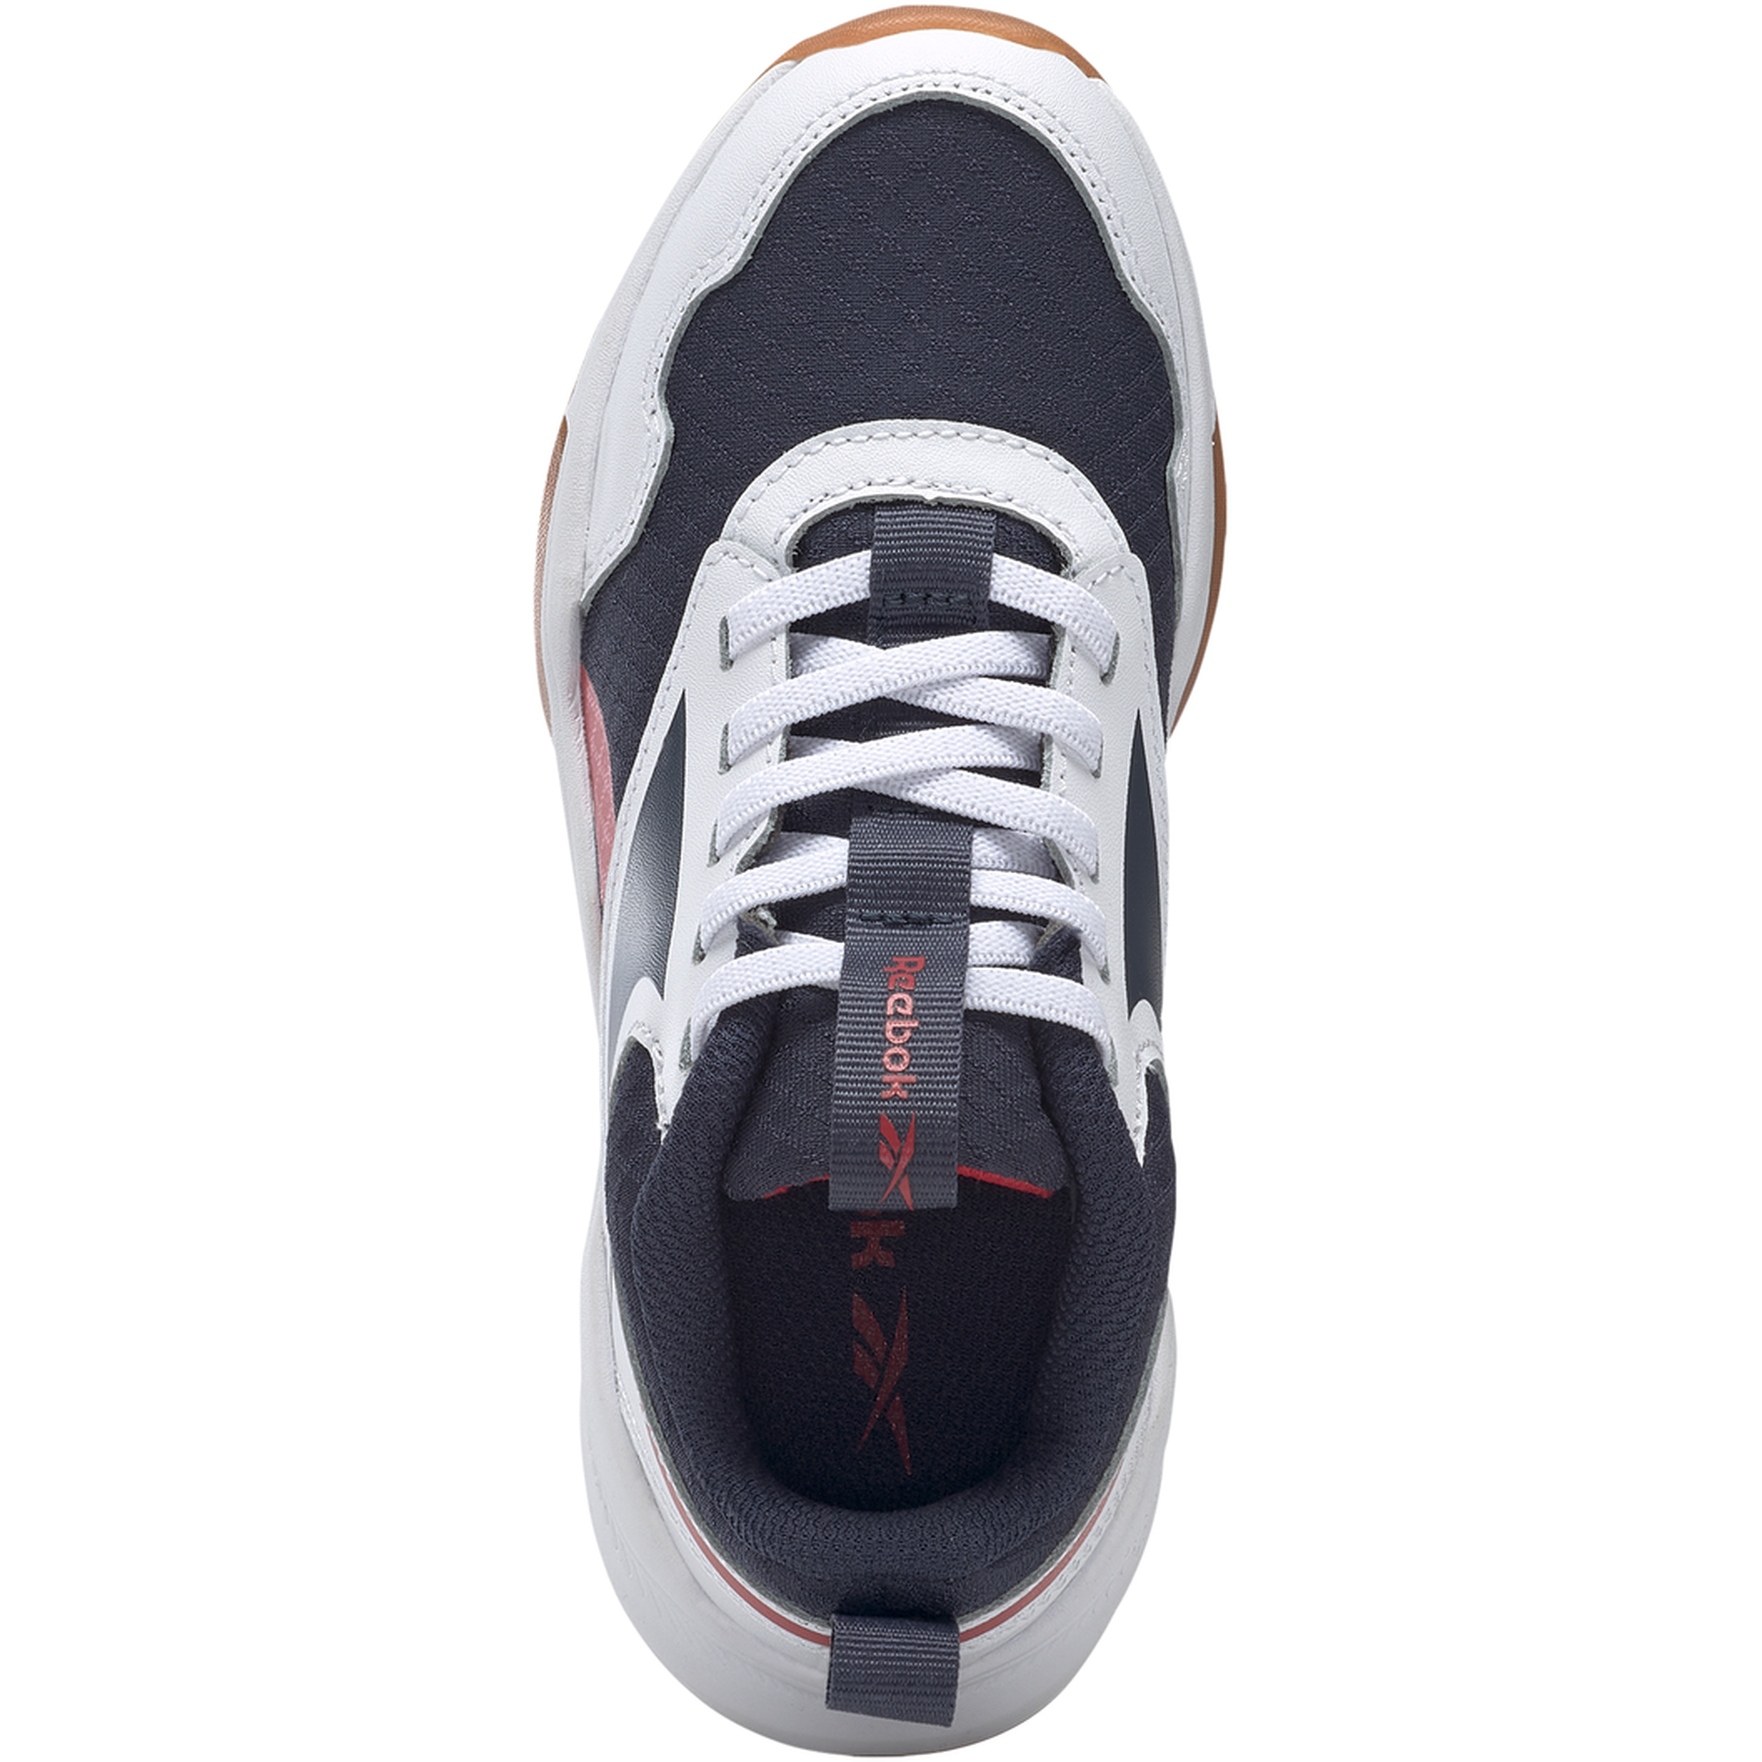 Kinder Sneaker ALT navy / vector vector - XT red / Reebok white Sprinter 2